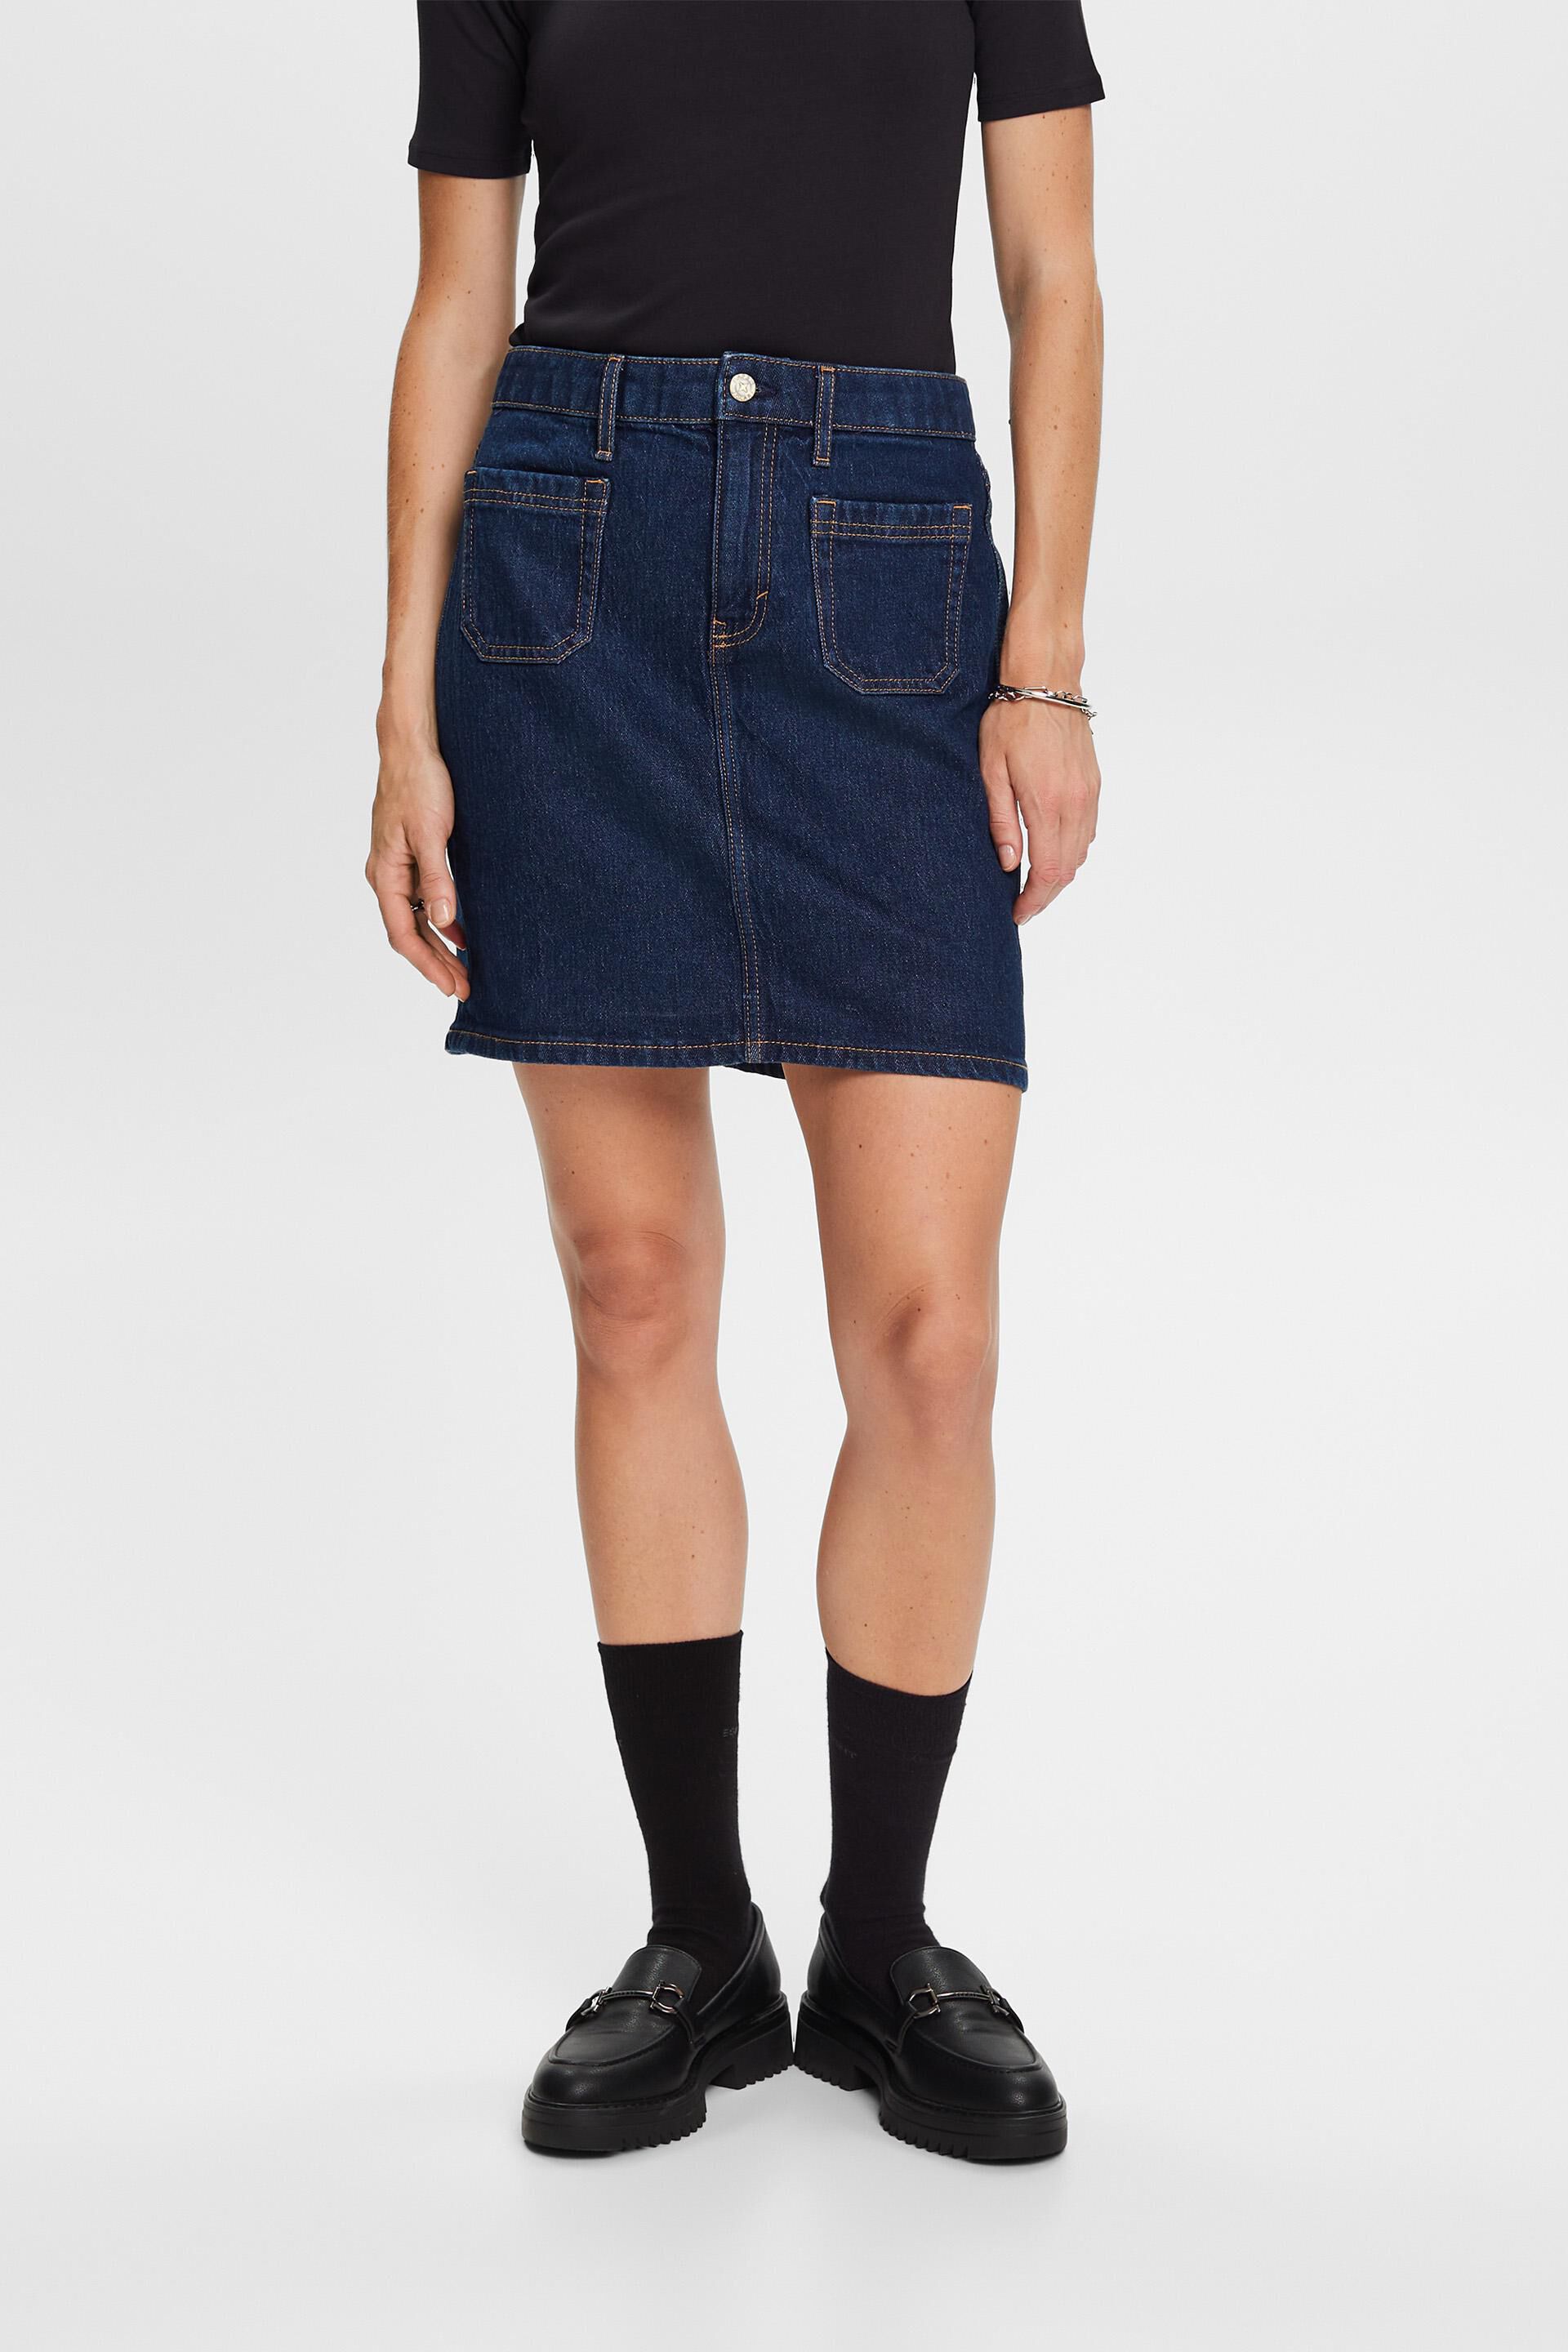 Esprit Damen Recycled: jeans mini skirt